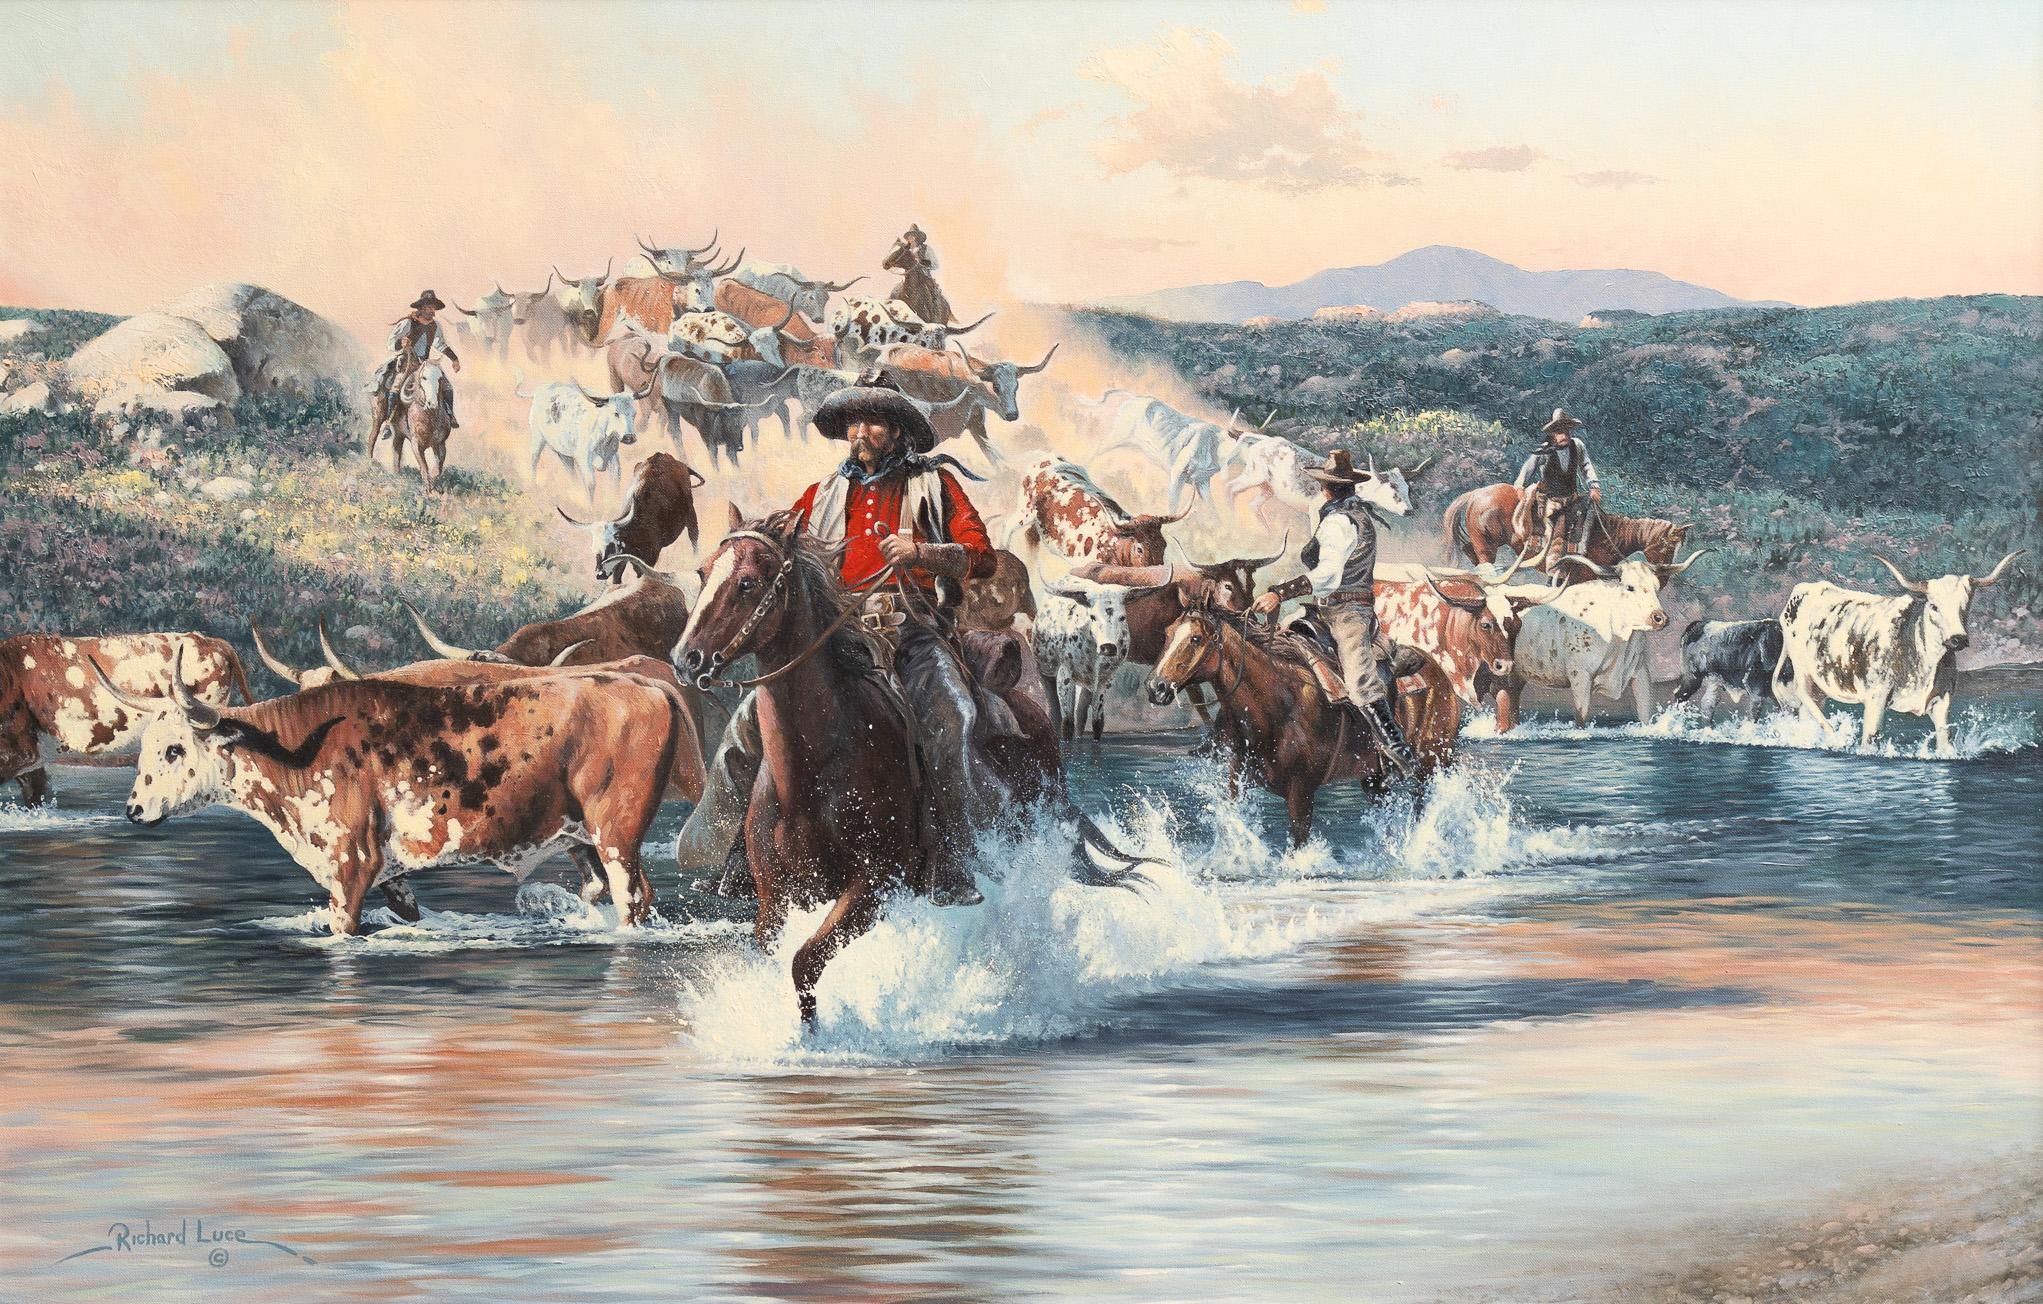 Richard Luce Figurative Painting - "Crossing the Creek" Cowboy Cattle Drive Scene